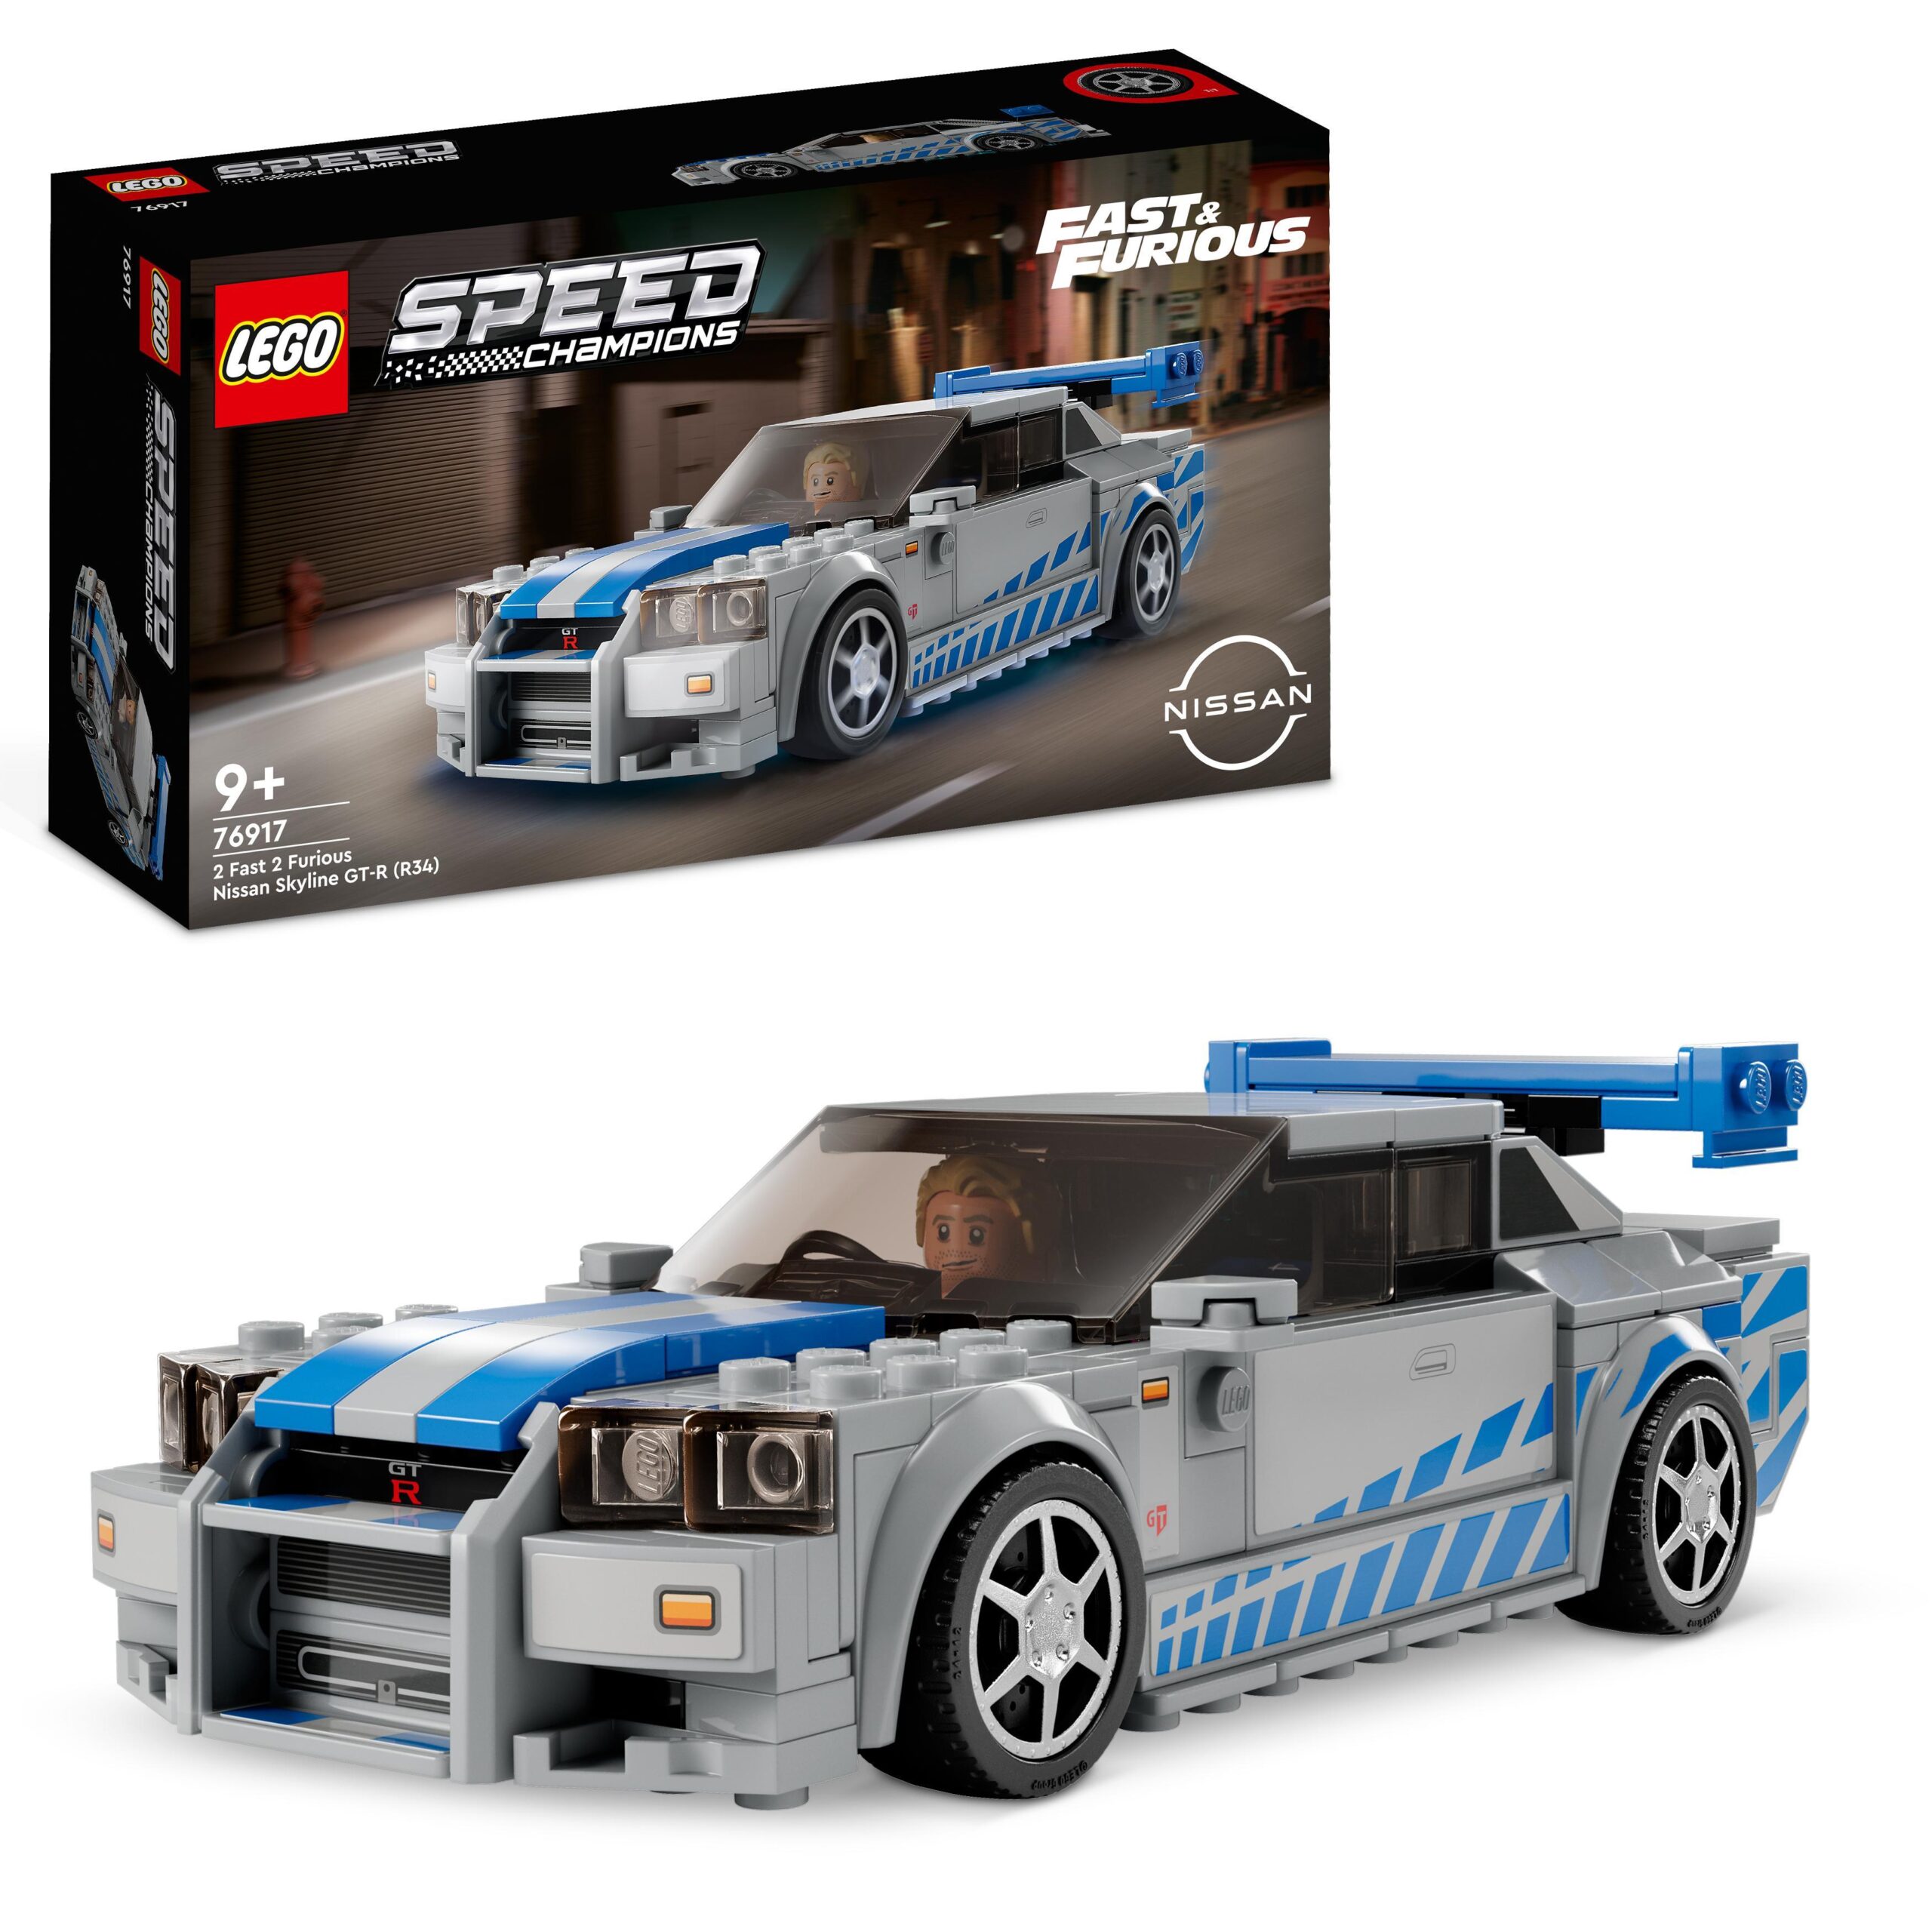 Lego speed champions 76917 2 fast 2 furious nissan skyline gt-r